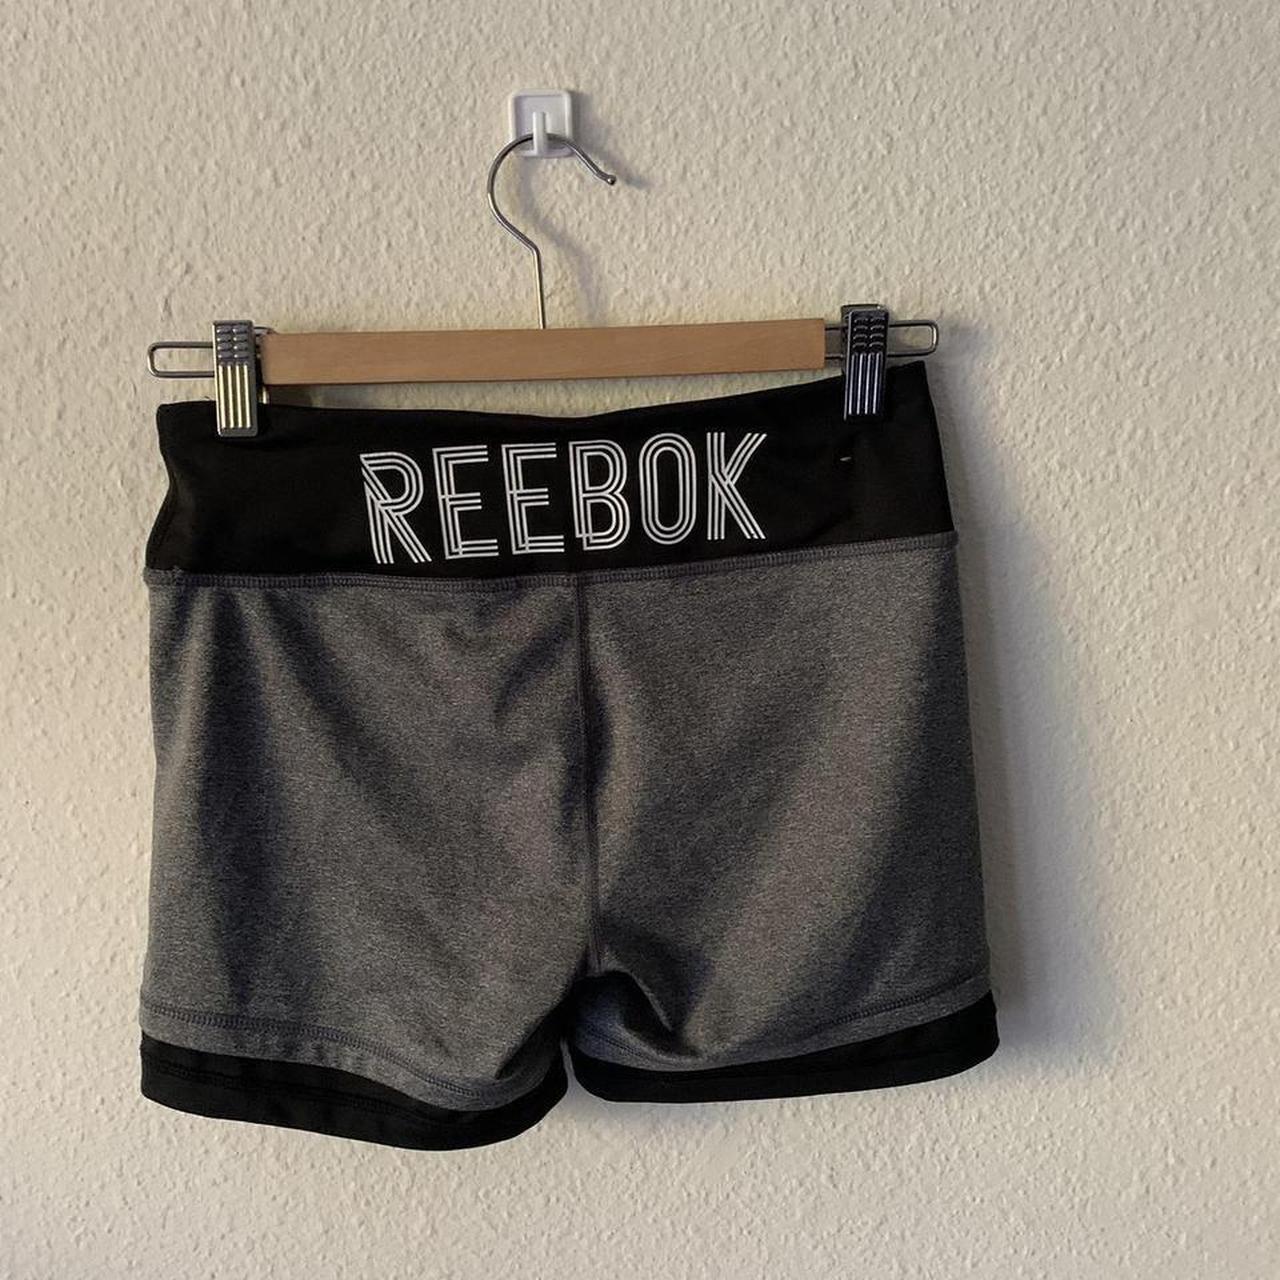 Reebok spandex shorts in grey size small - Depop